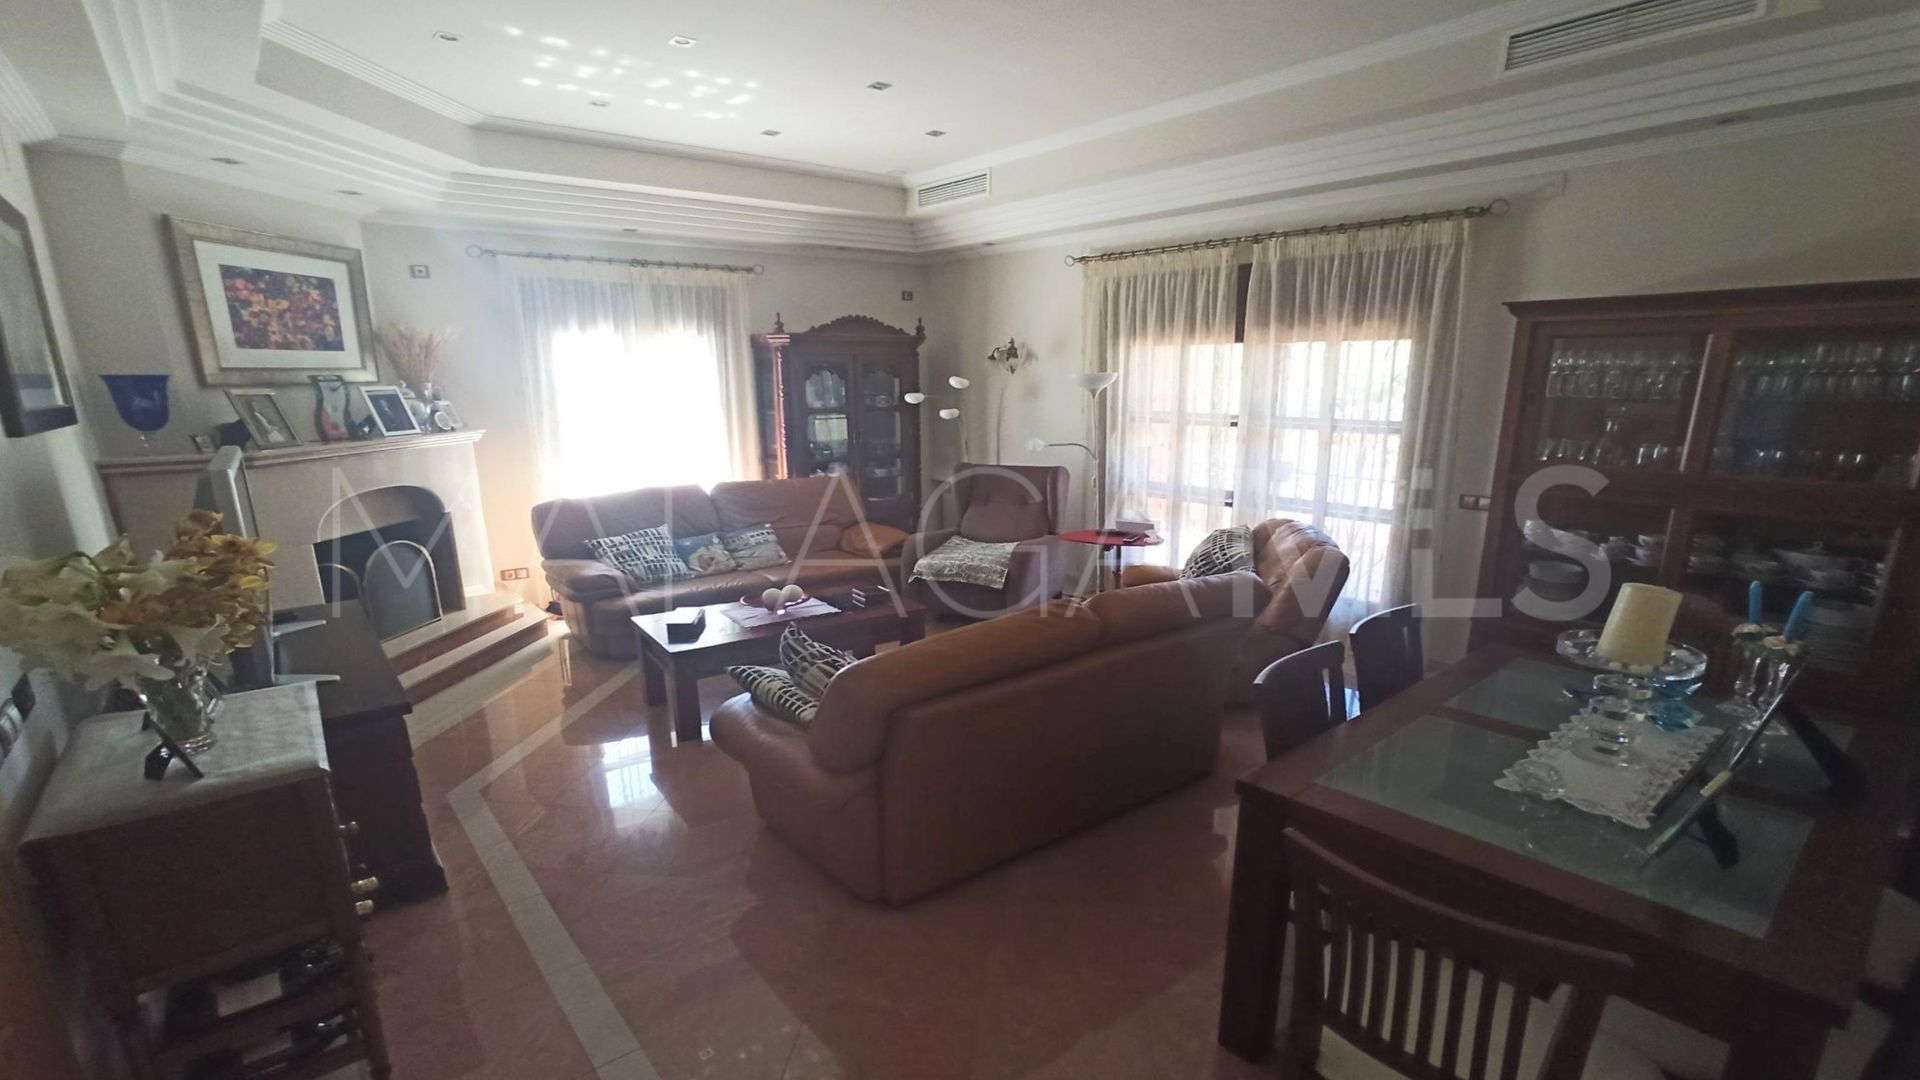 4 bedrooms villa in Manilva for sale